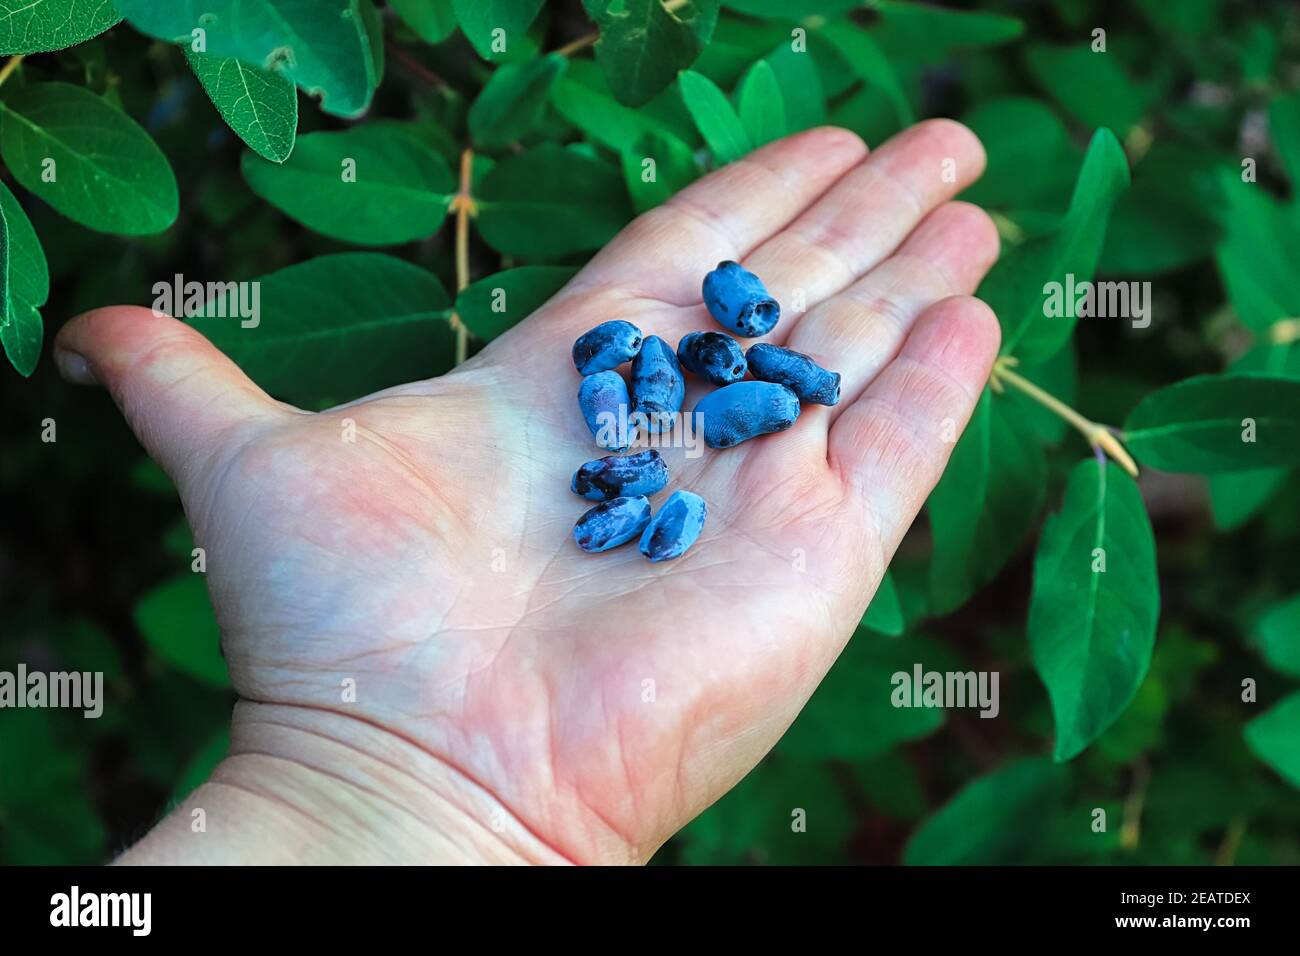 Eine offene Hand hält reife haskap Beeren am Baum Stockfoto